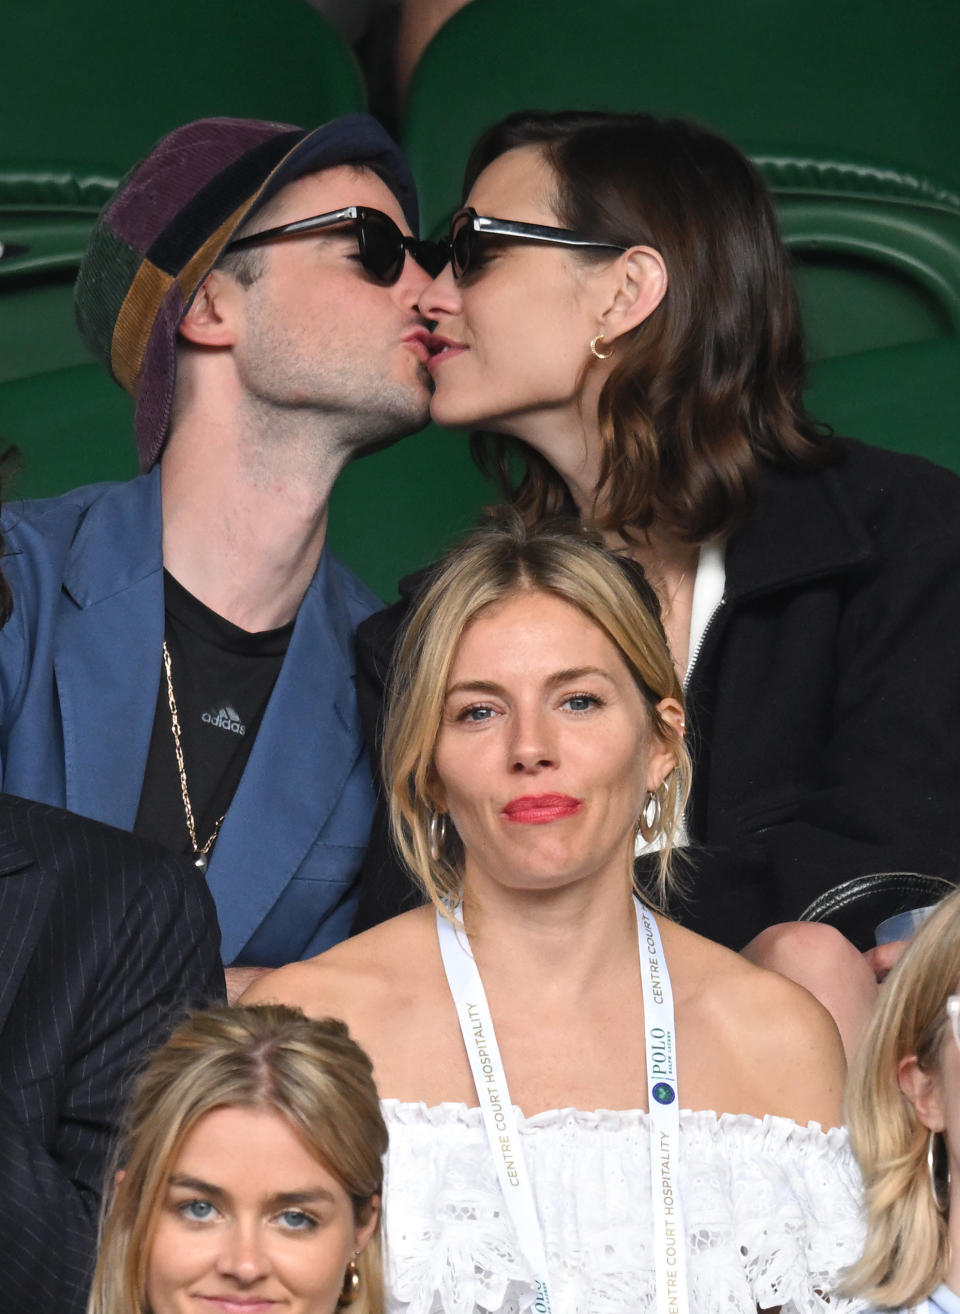 Her ex-boyfriend Tom Sturridge was also seen kissing his new girlfriend Alexa Chung. (Getty Images)